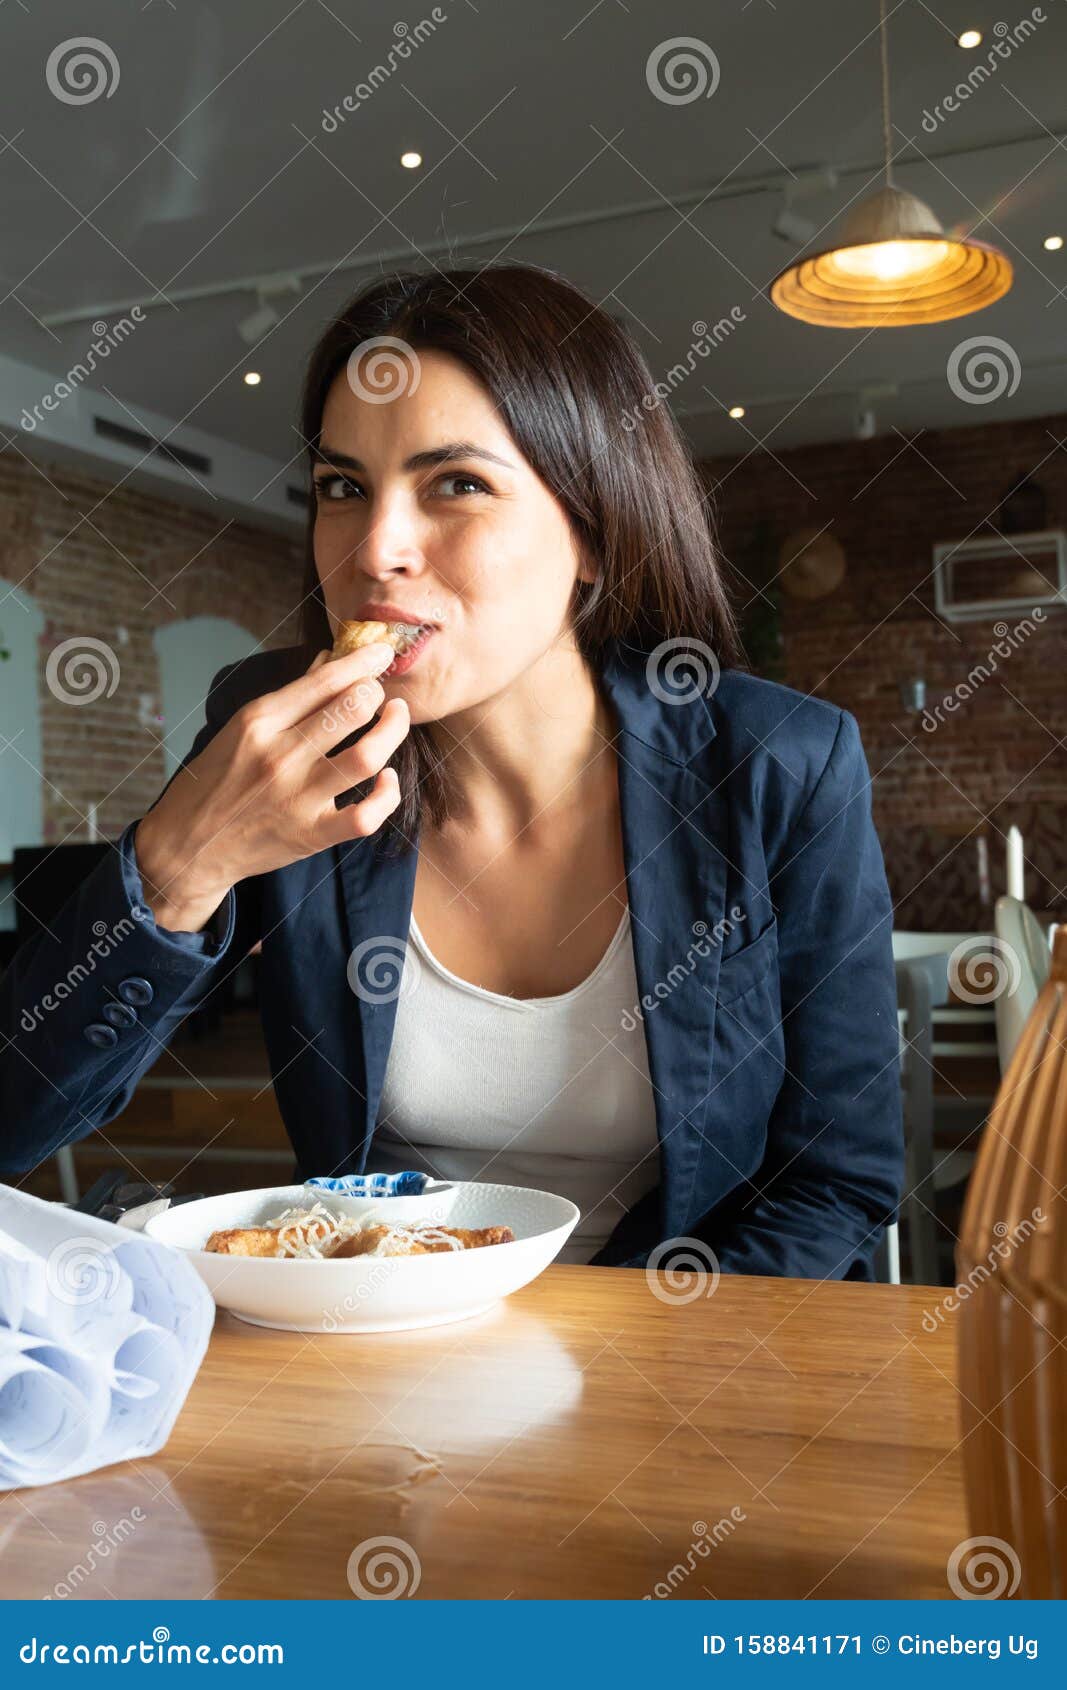 eating between girl